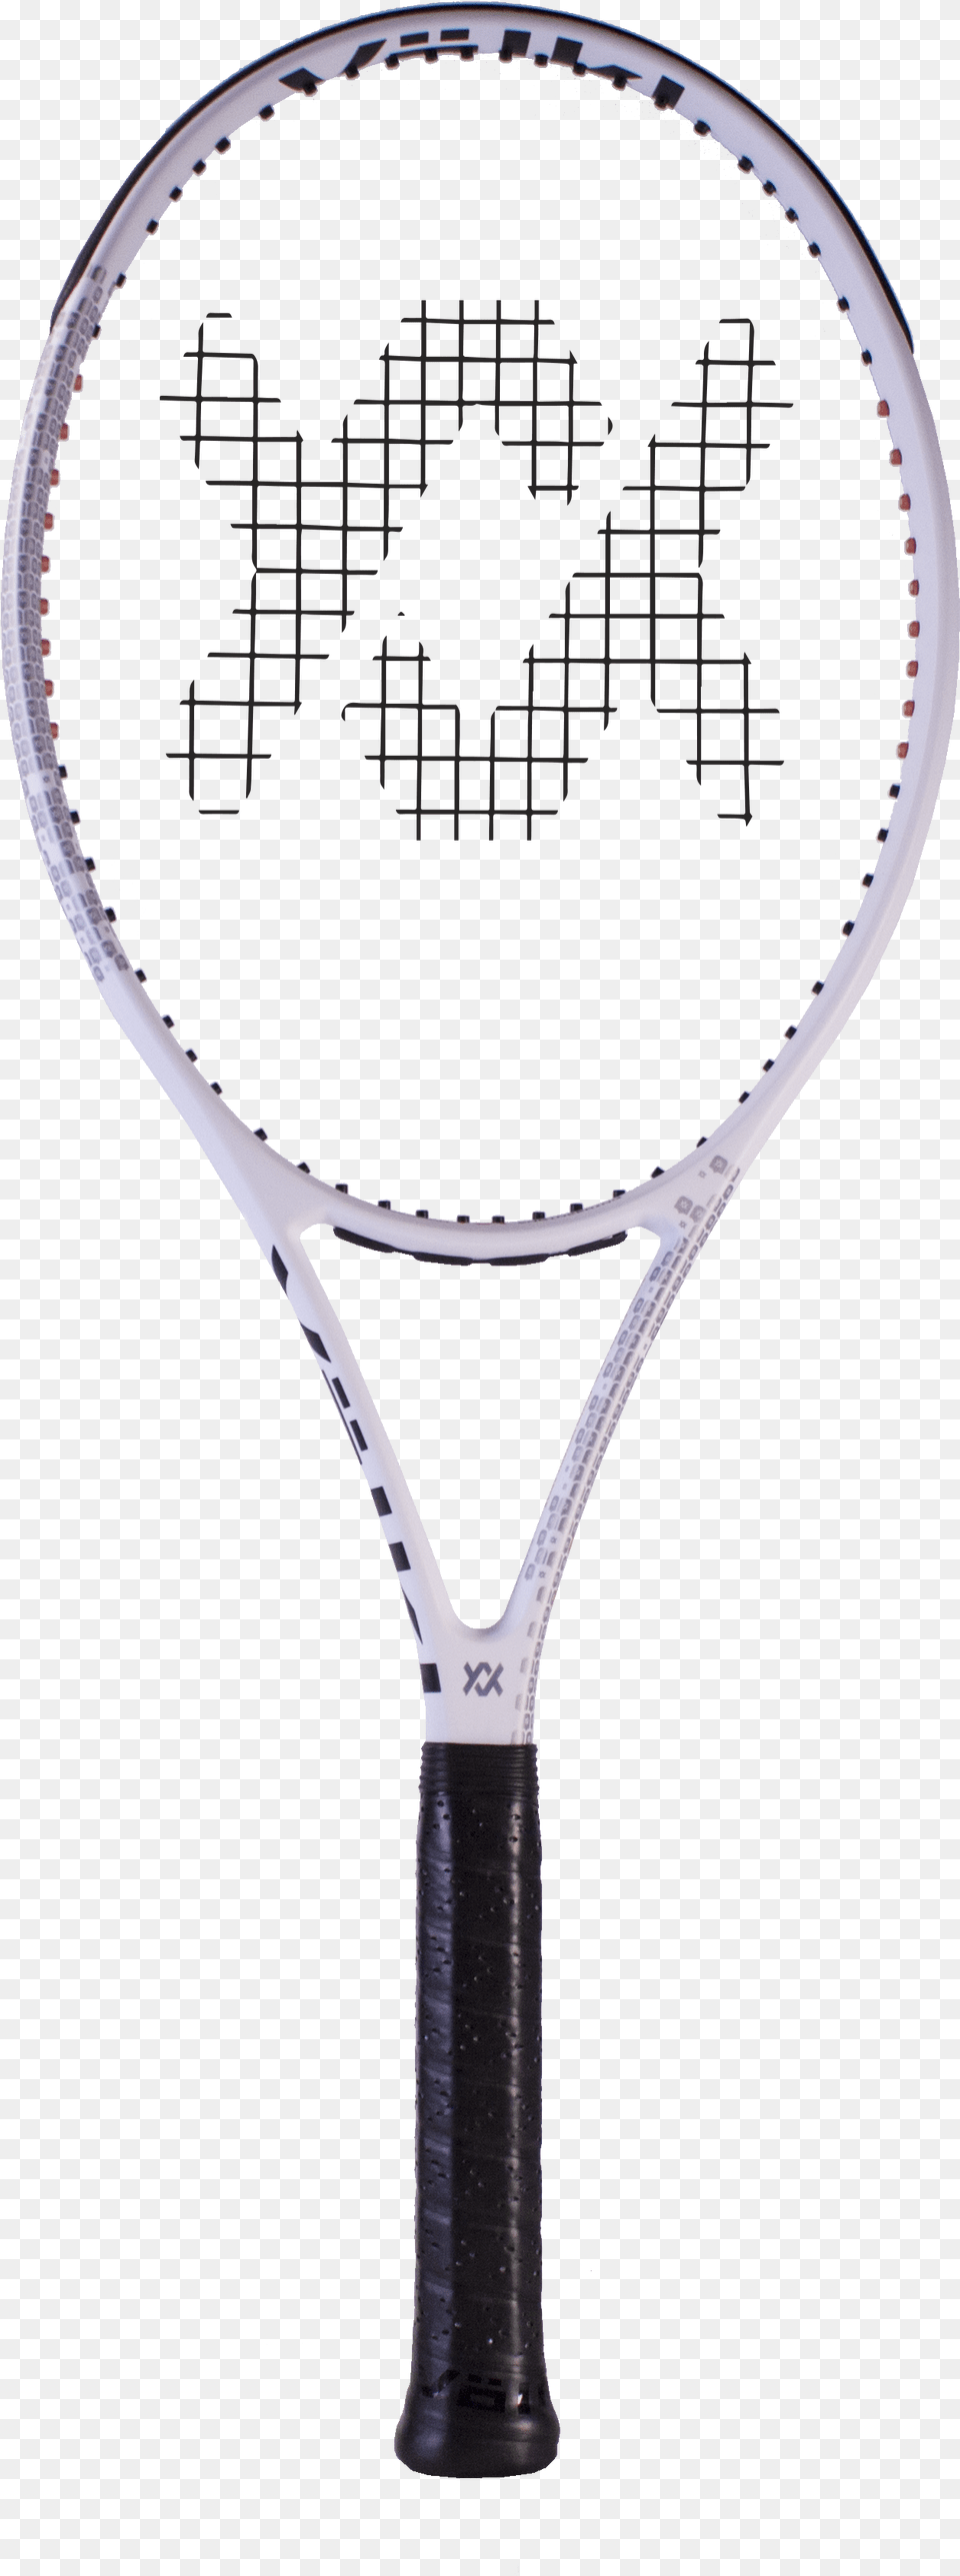 Tennis Racket Volkl V Feel, Sport, Tennis Racket, Ping Pong, Ping Pong Paddle Png